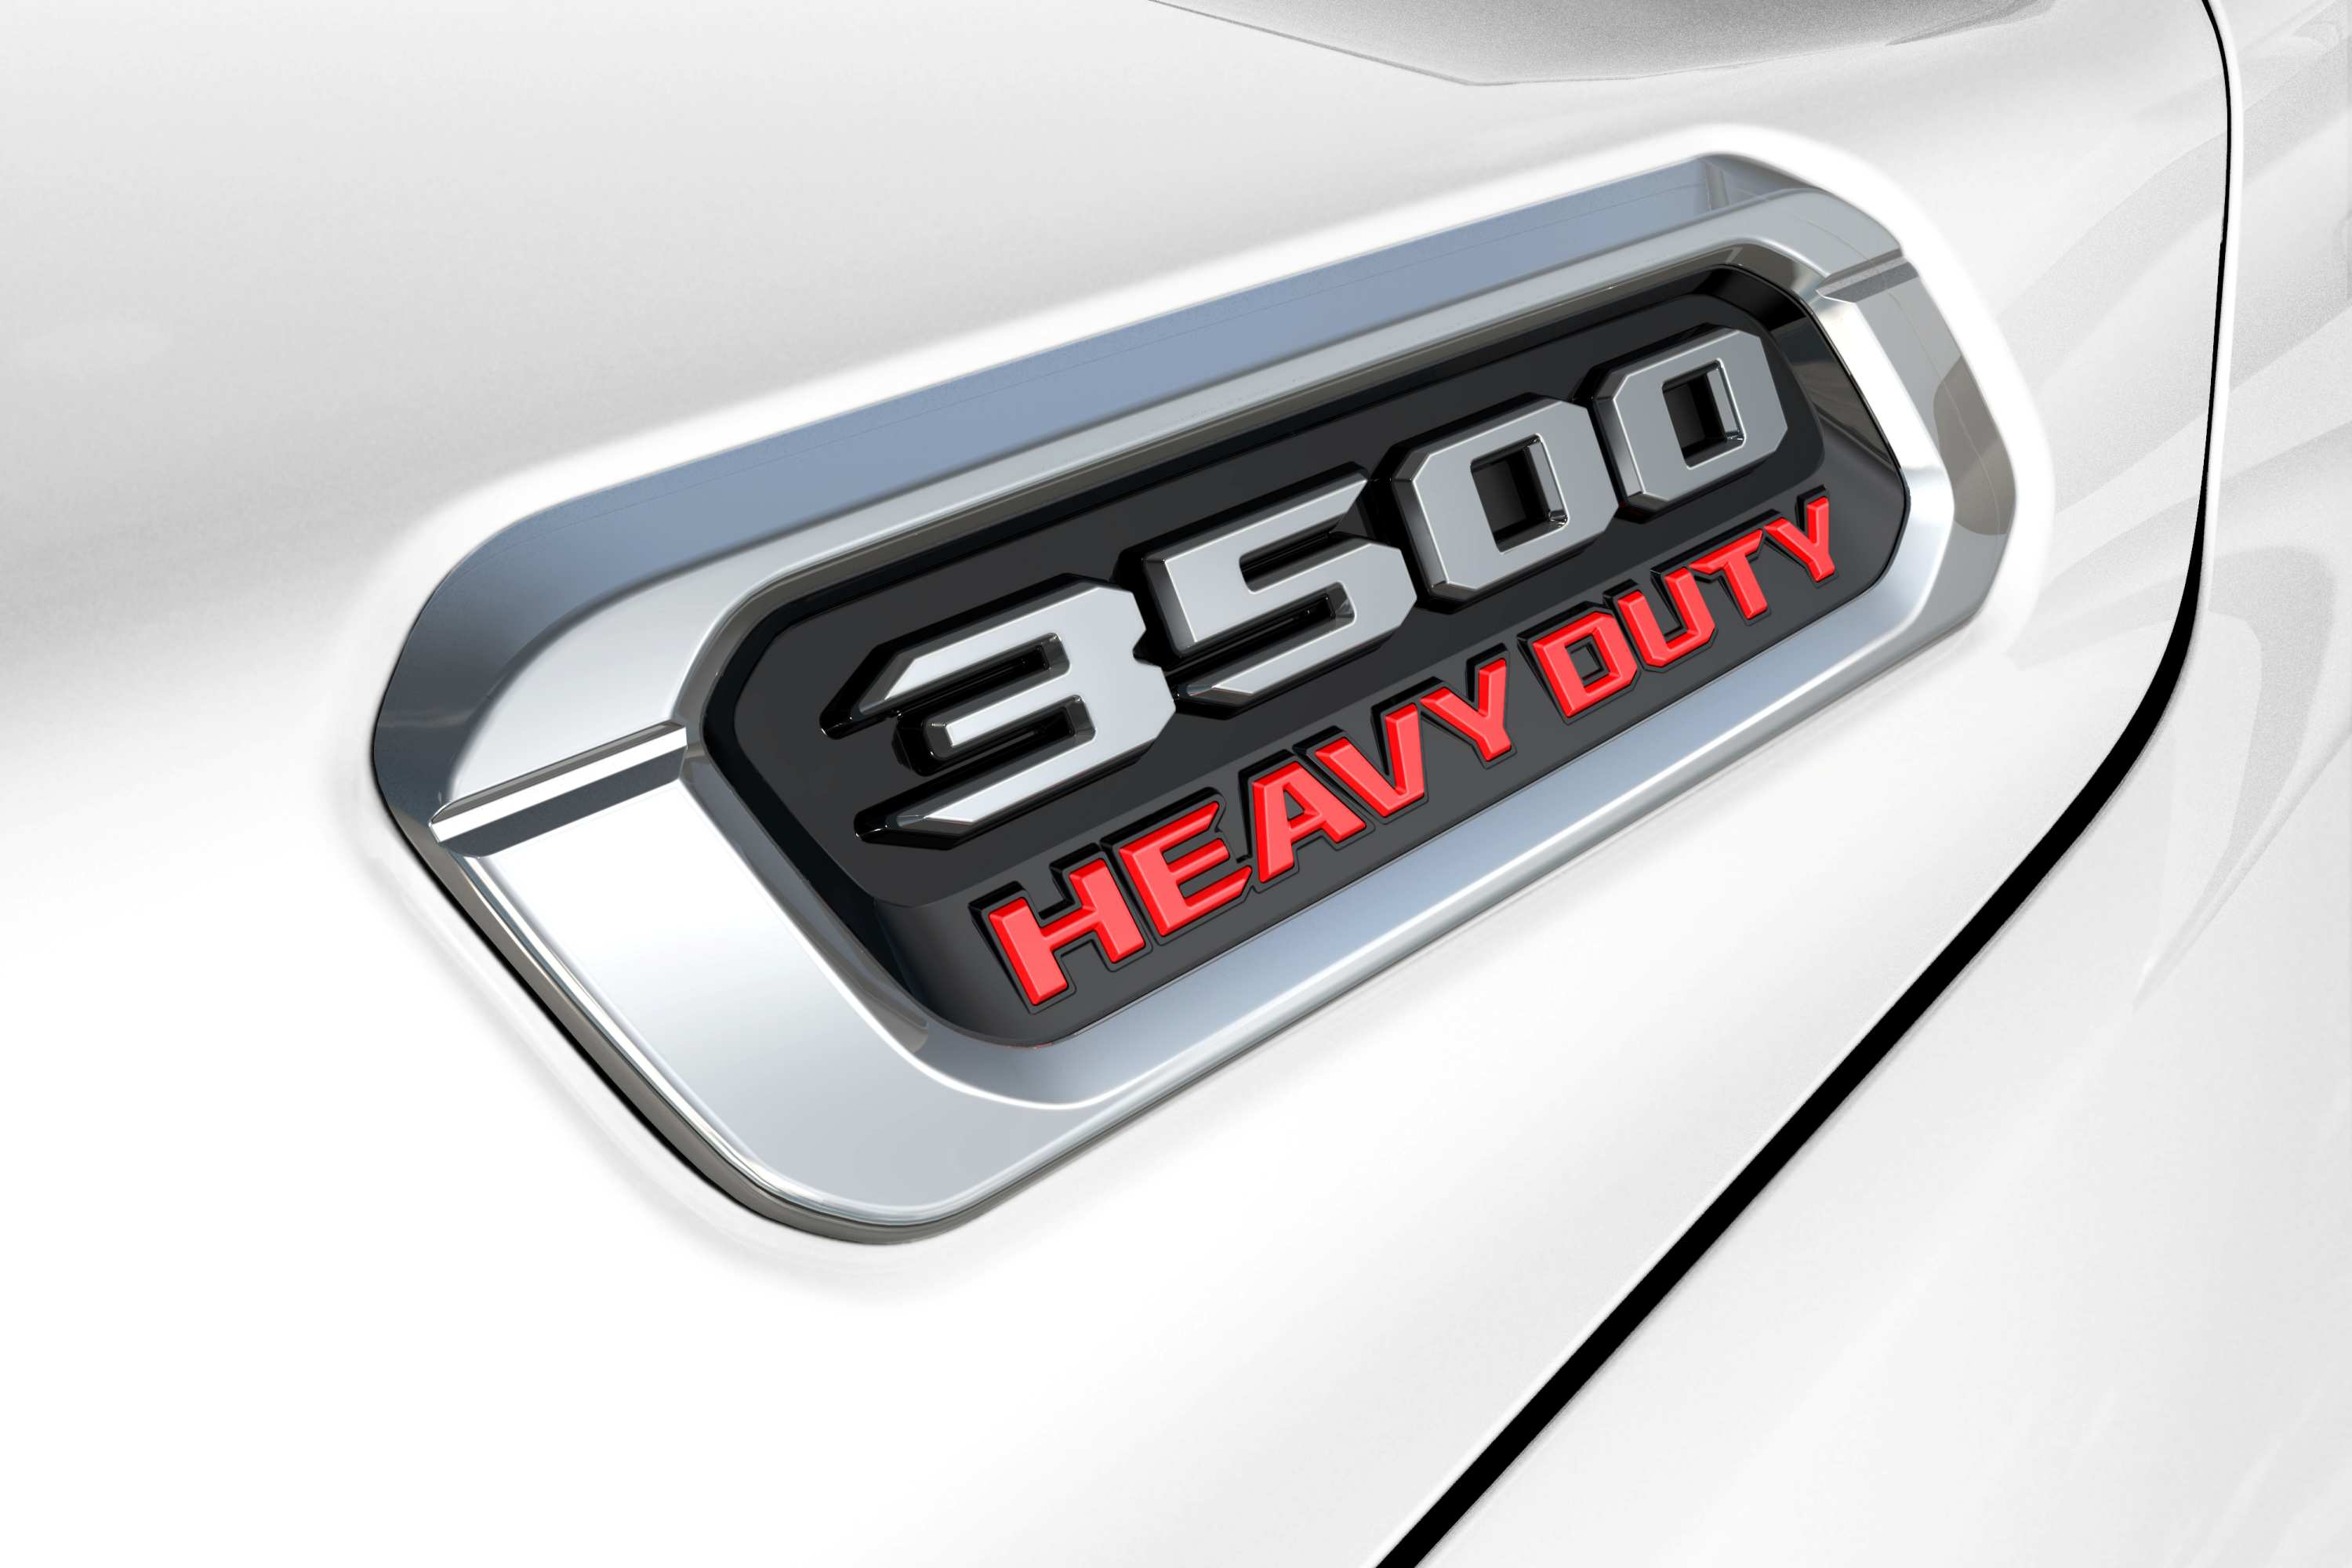 2019 Ram Heavy Duty 3500 badge